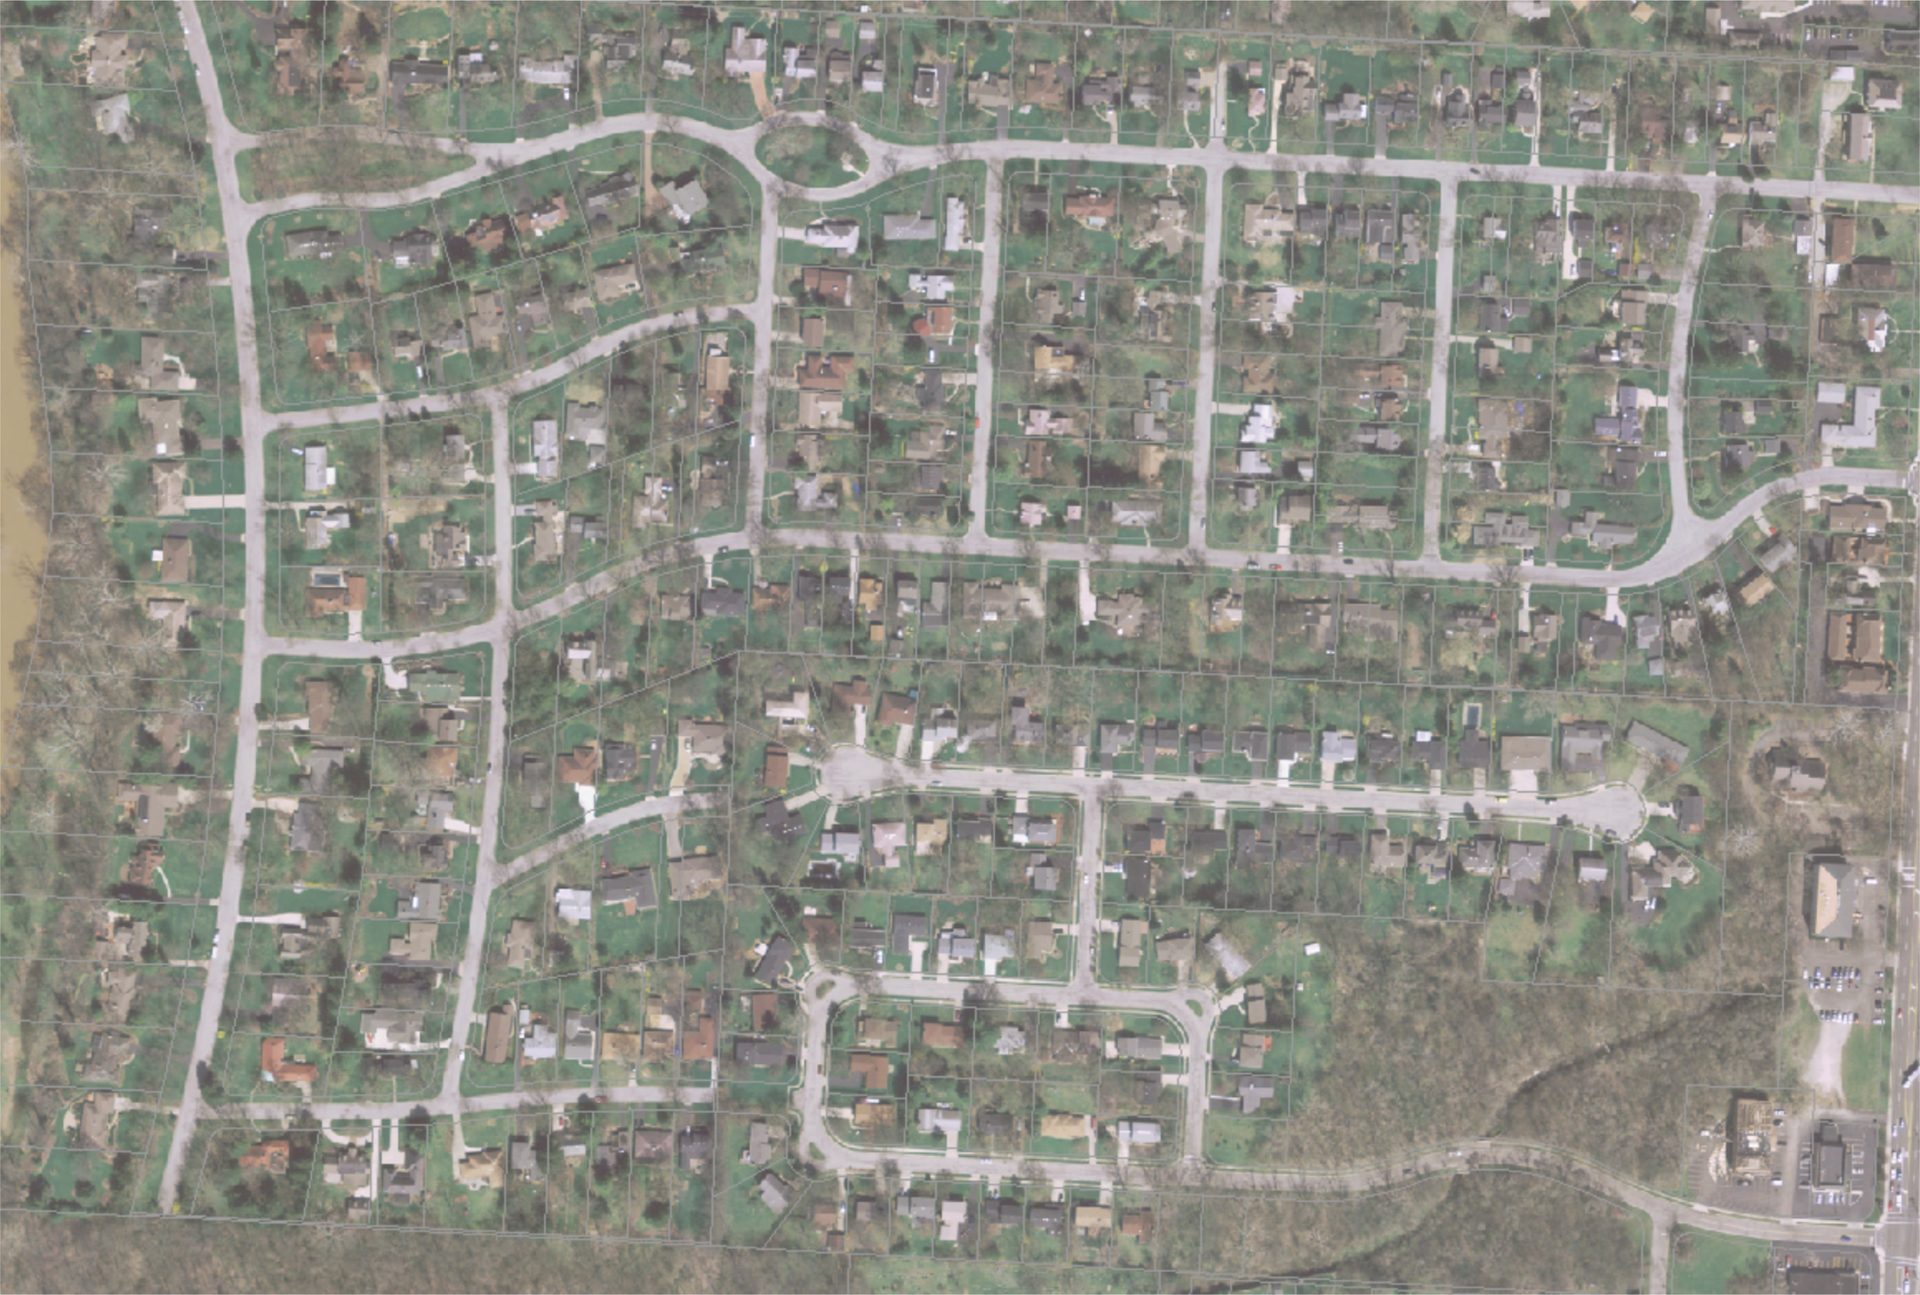 Land lot, Urban design, Residential area, Brown, Map, Landscape